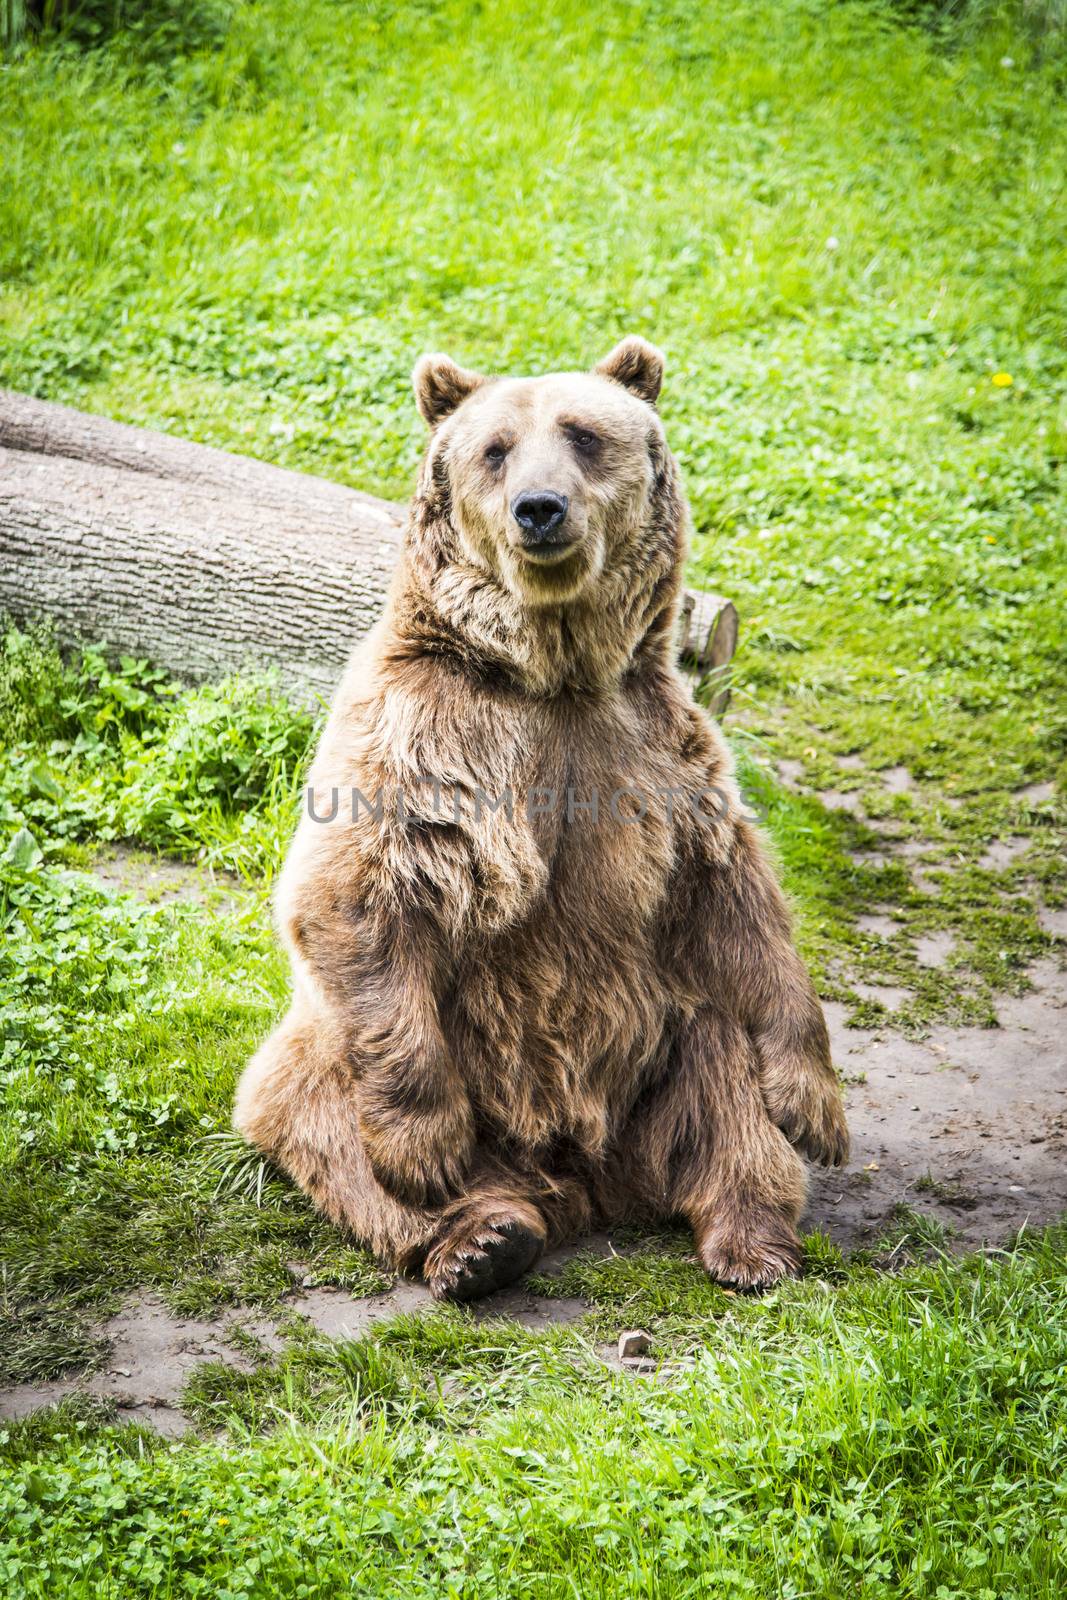 Brown bear Ursus arctos in its own envirnment